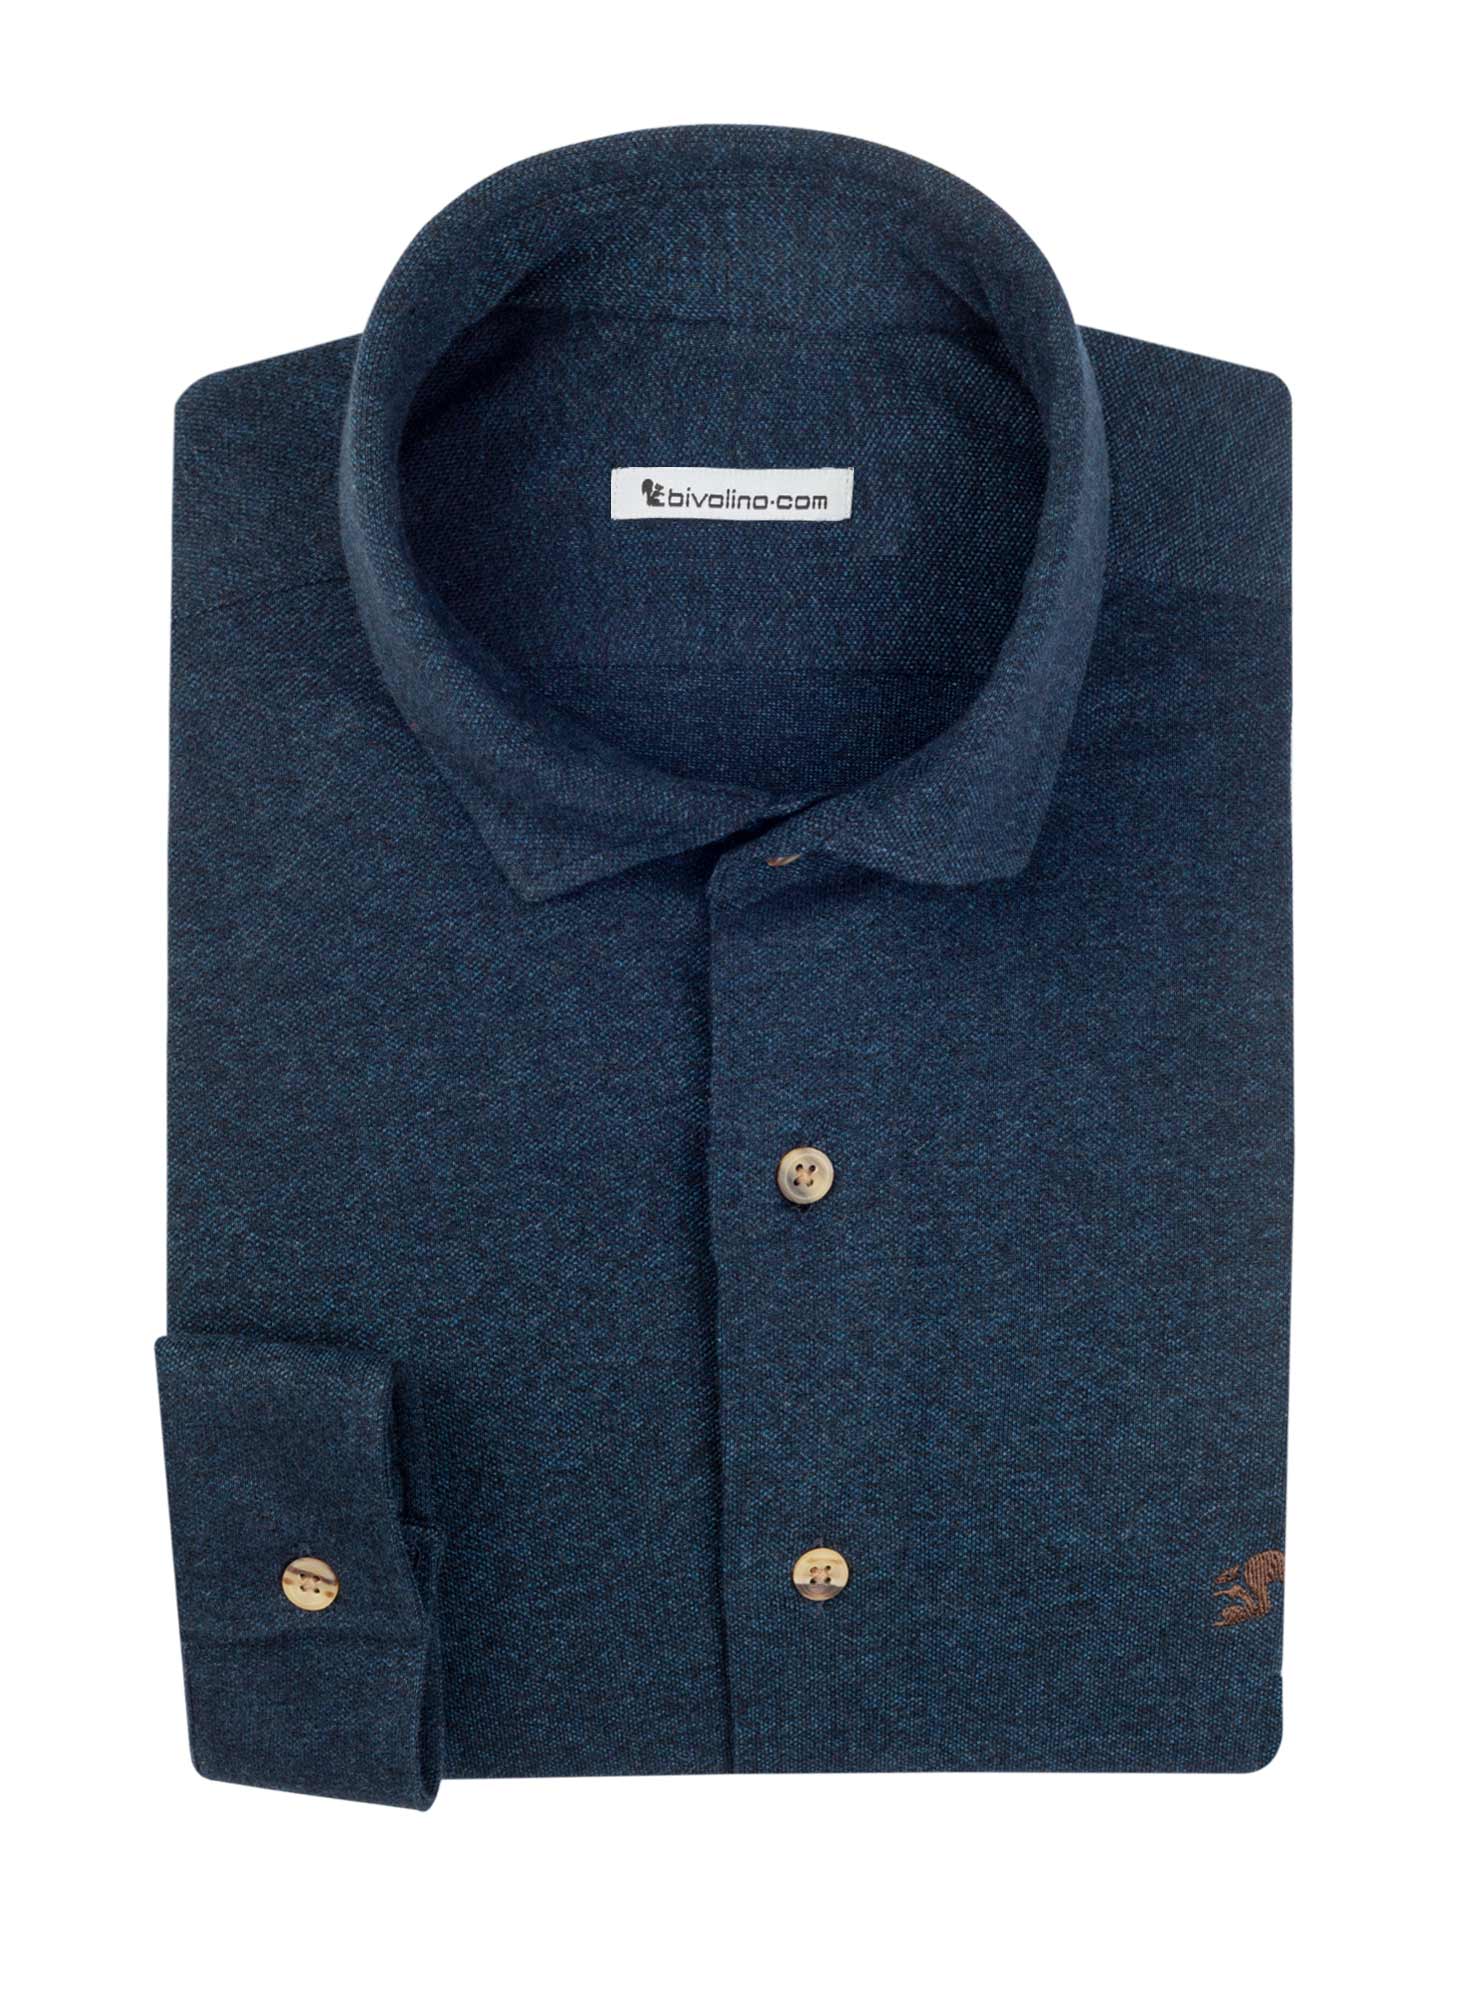 PALERMO - 100% cotton piqué Jersey navy tailored men shirt - JERSILI 4